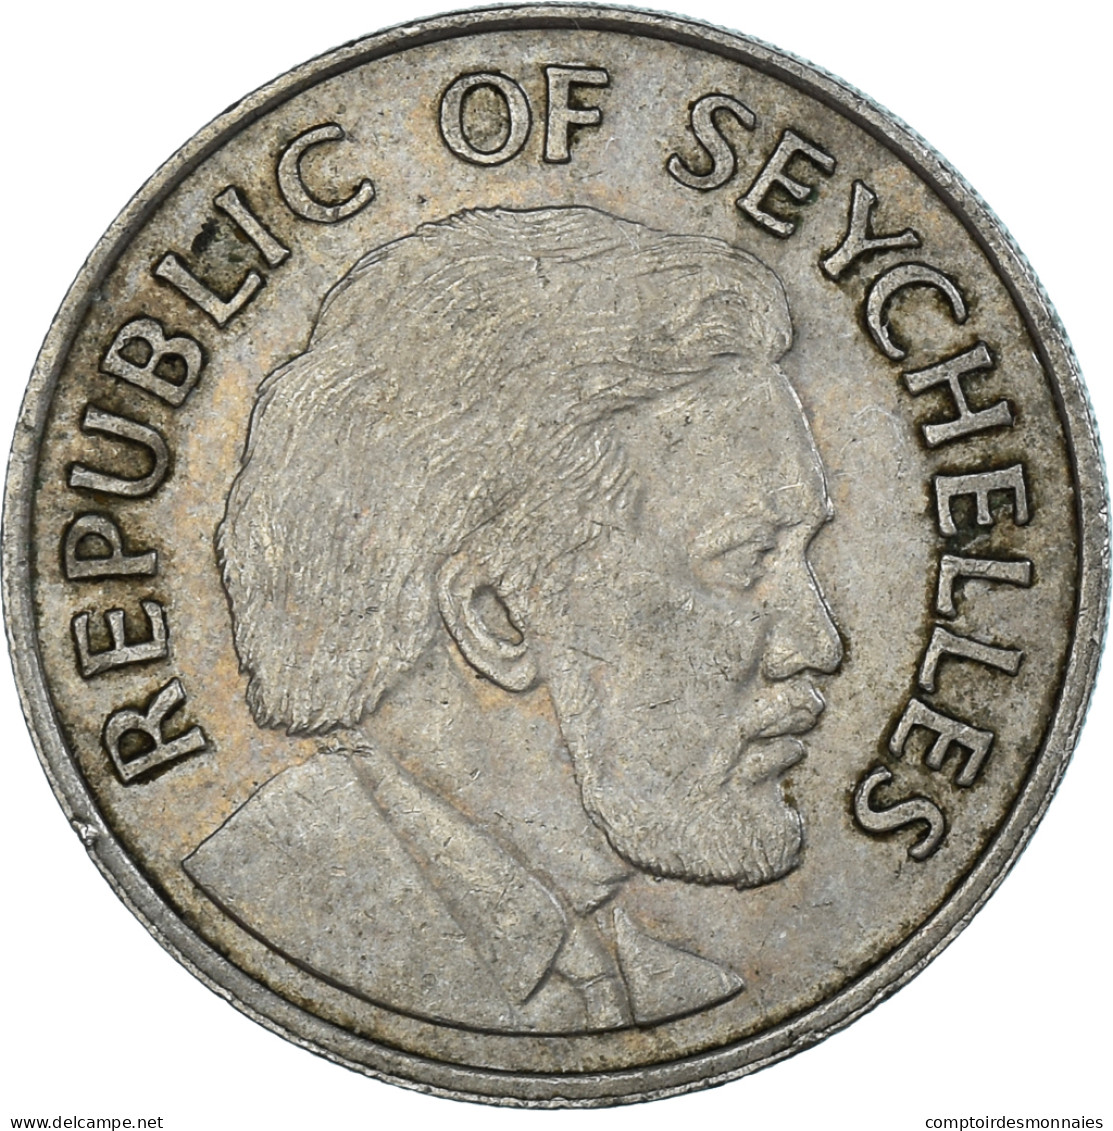 Monnaie, Seychelles, 50 Cents, 1976 - Seychellen